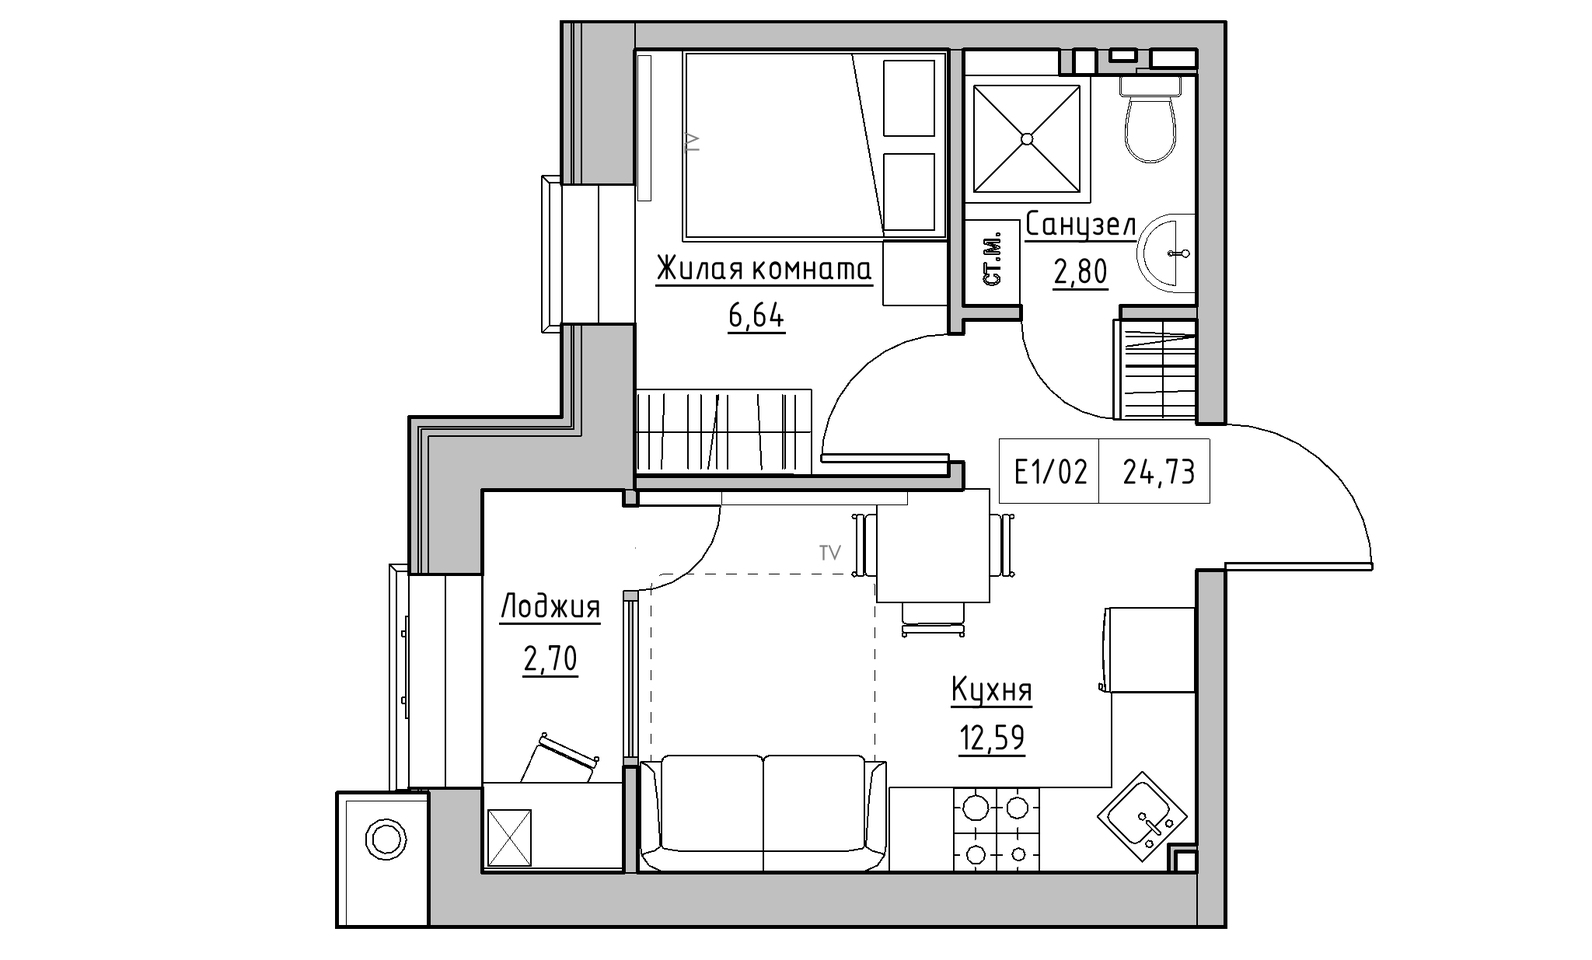 Planning 1-rm flats area 24.73m2, KS-014-04/0013.